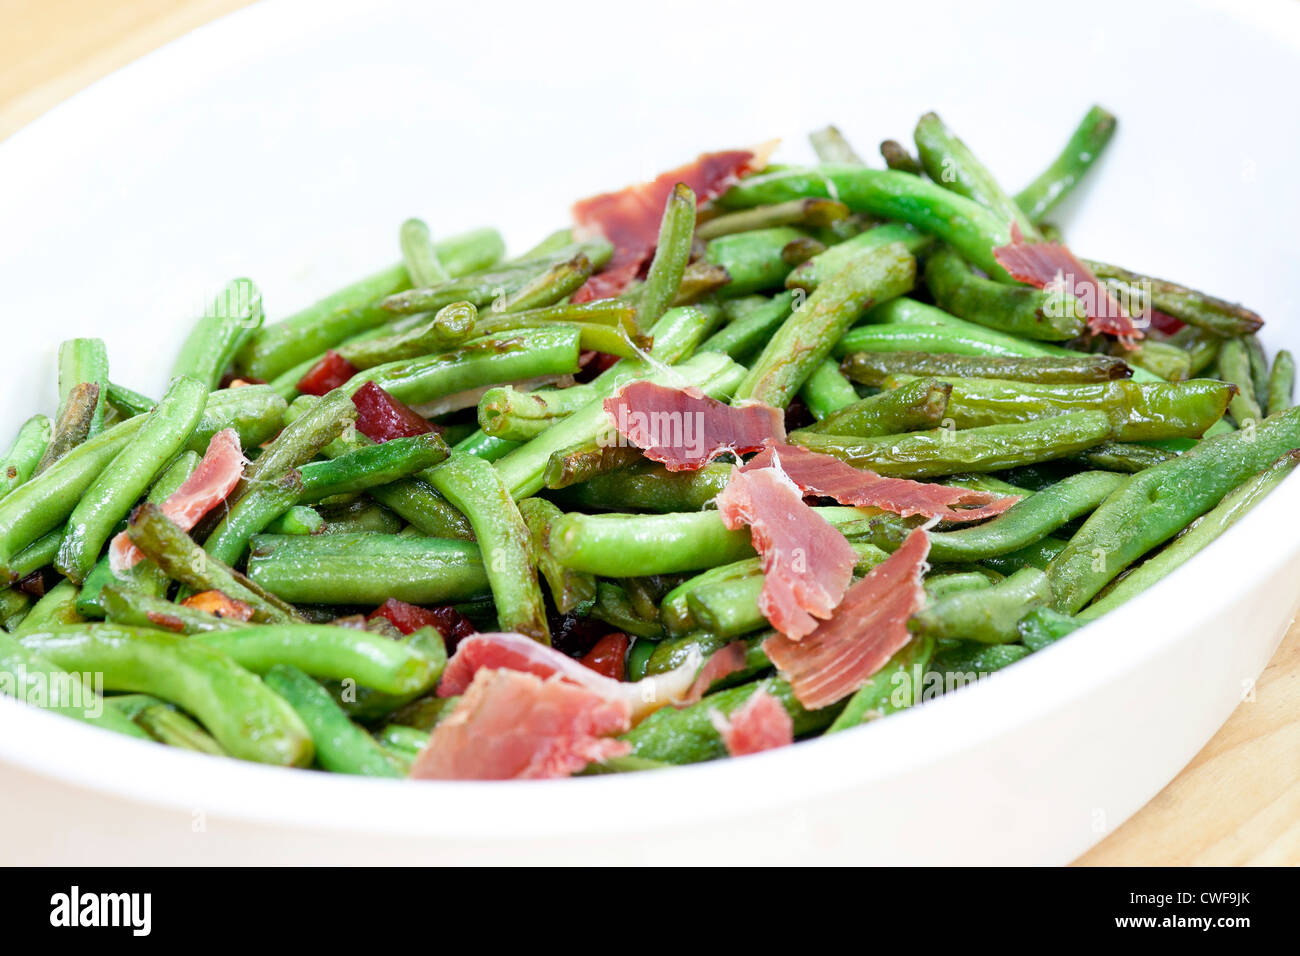 Salad - fried green beans with Serrano ham Stock Photo